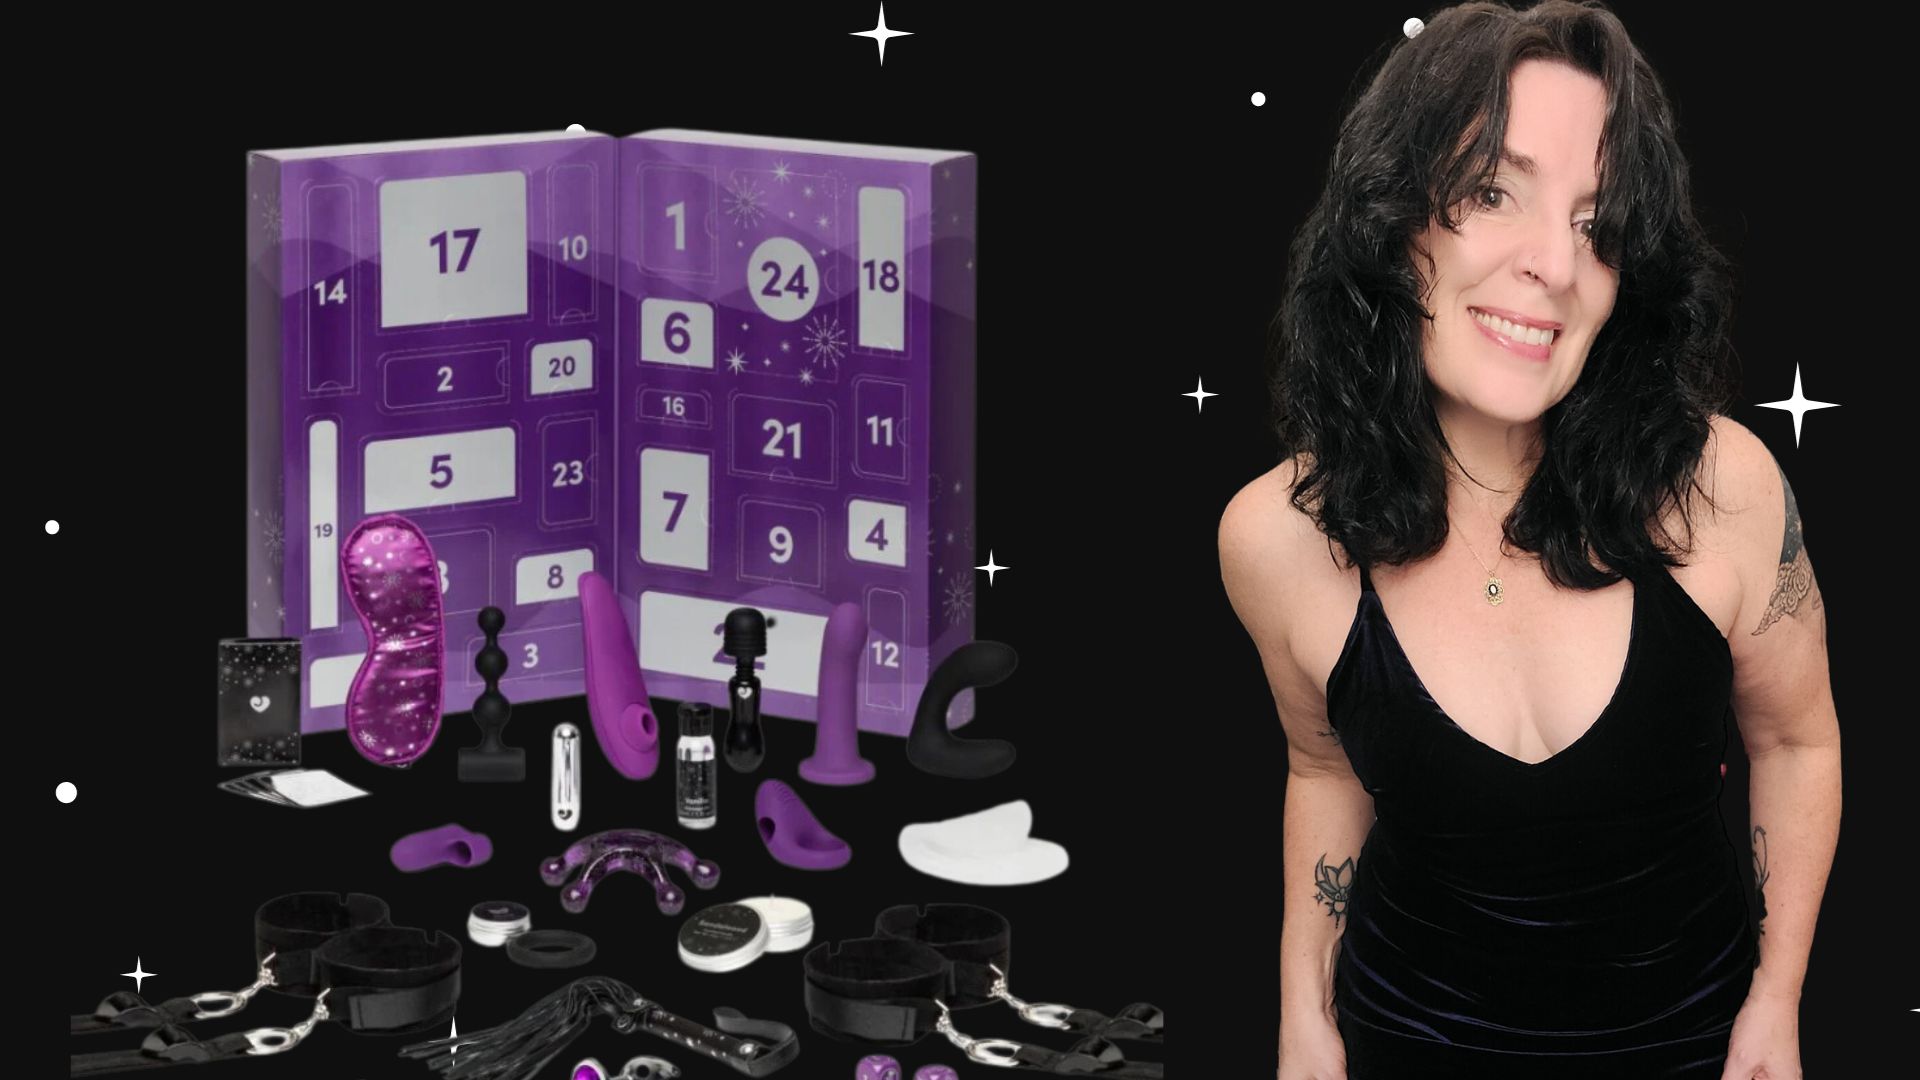 24 Piece Sex Toy Advent Calendar Your Sexploration Starter Kit She Explores Life